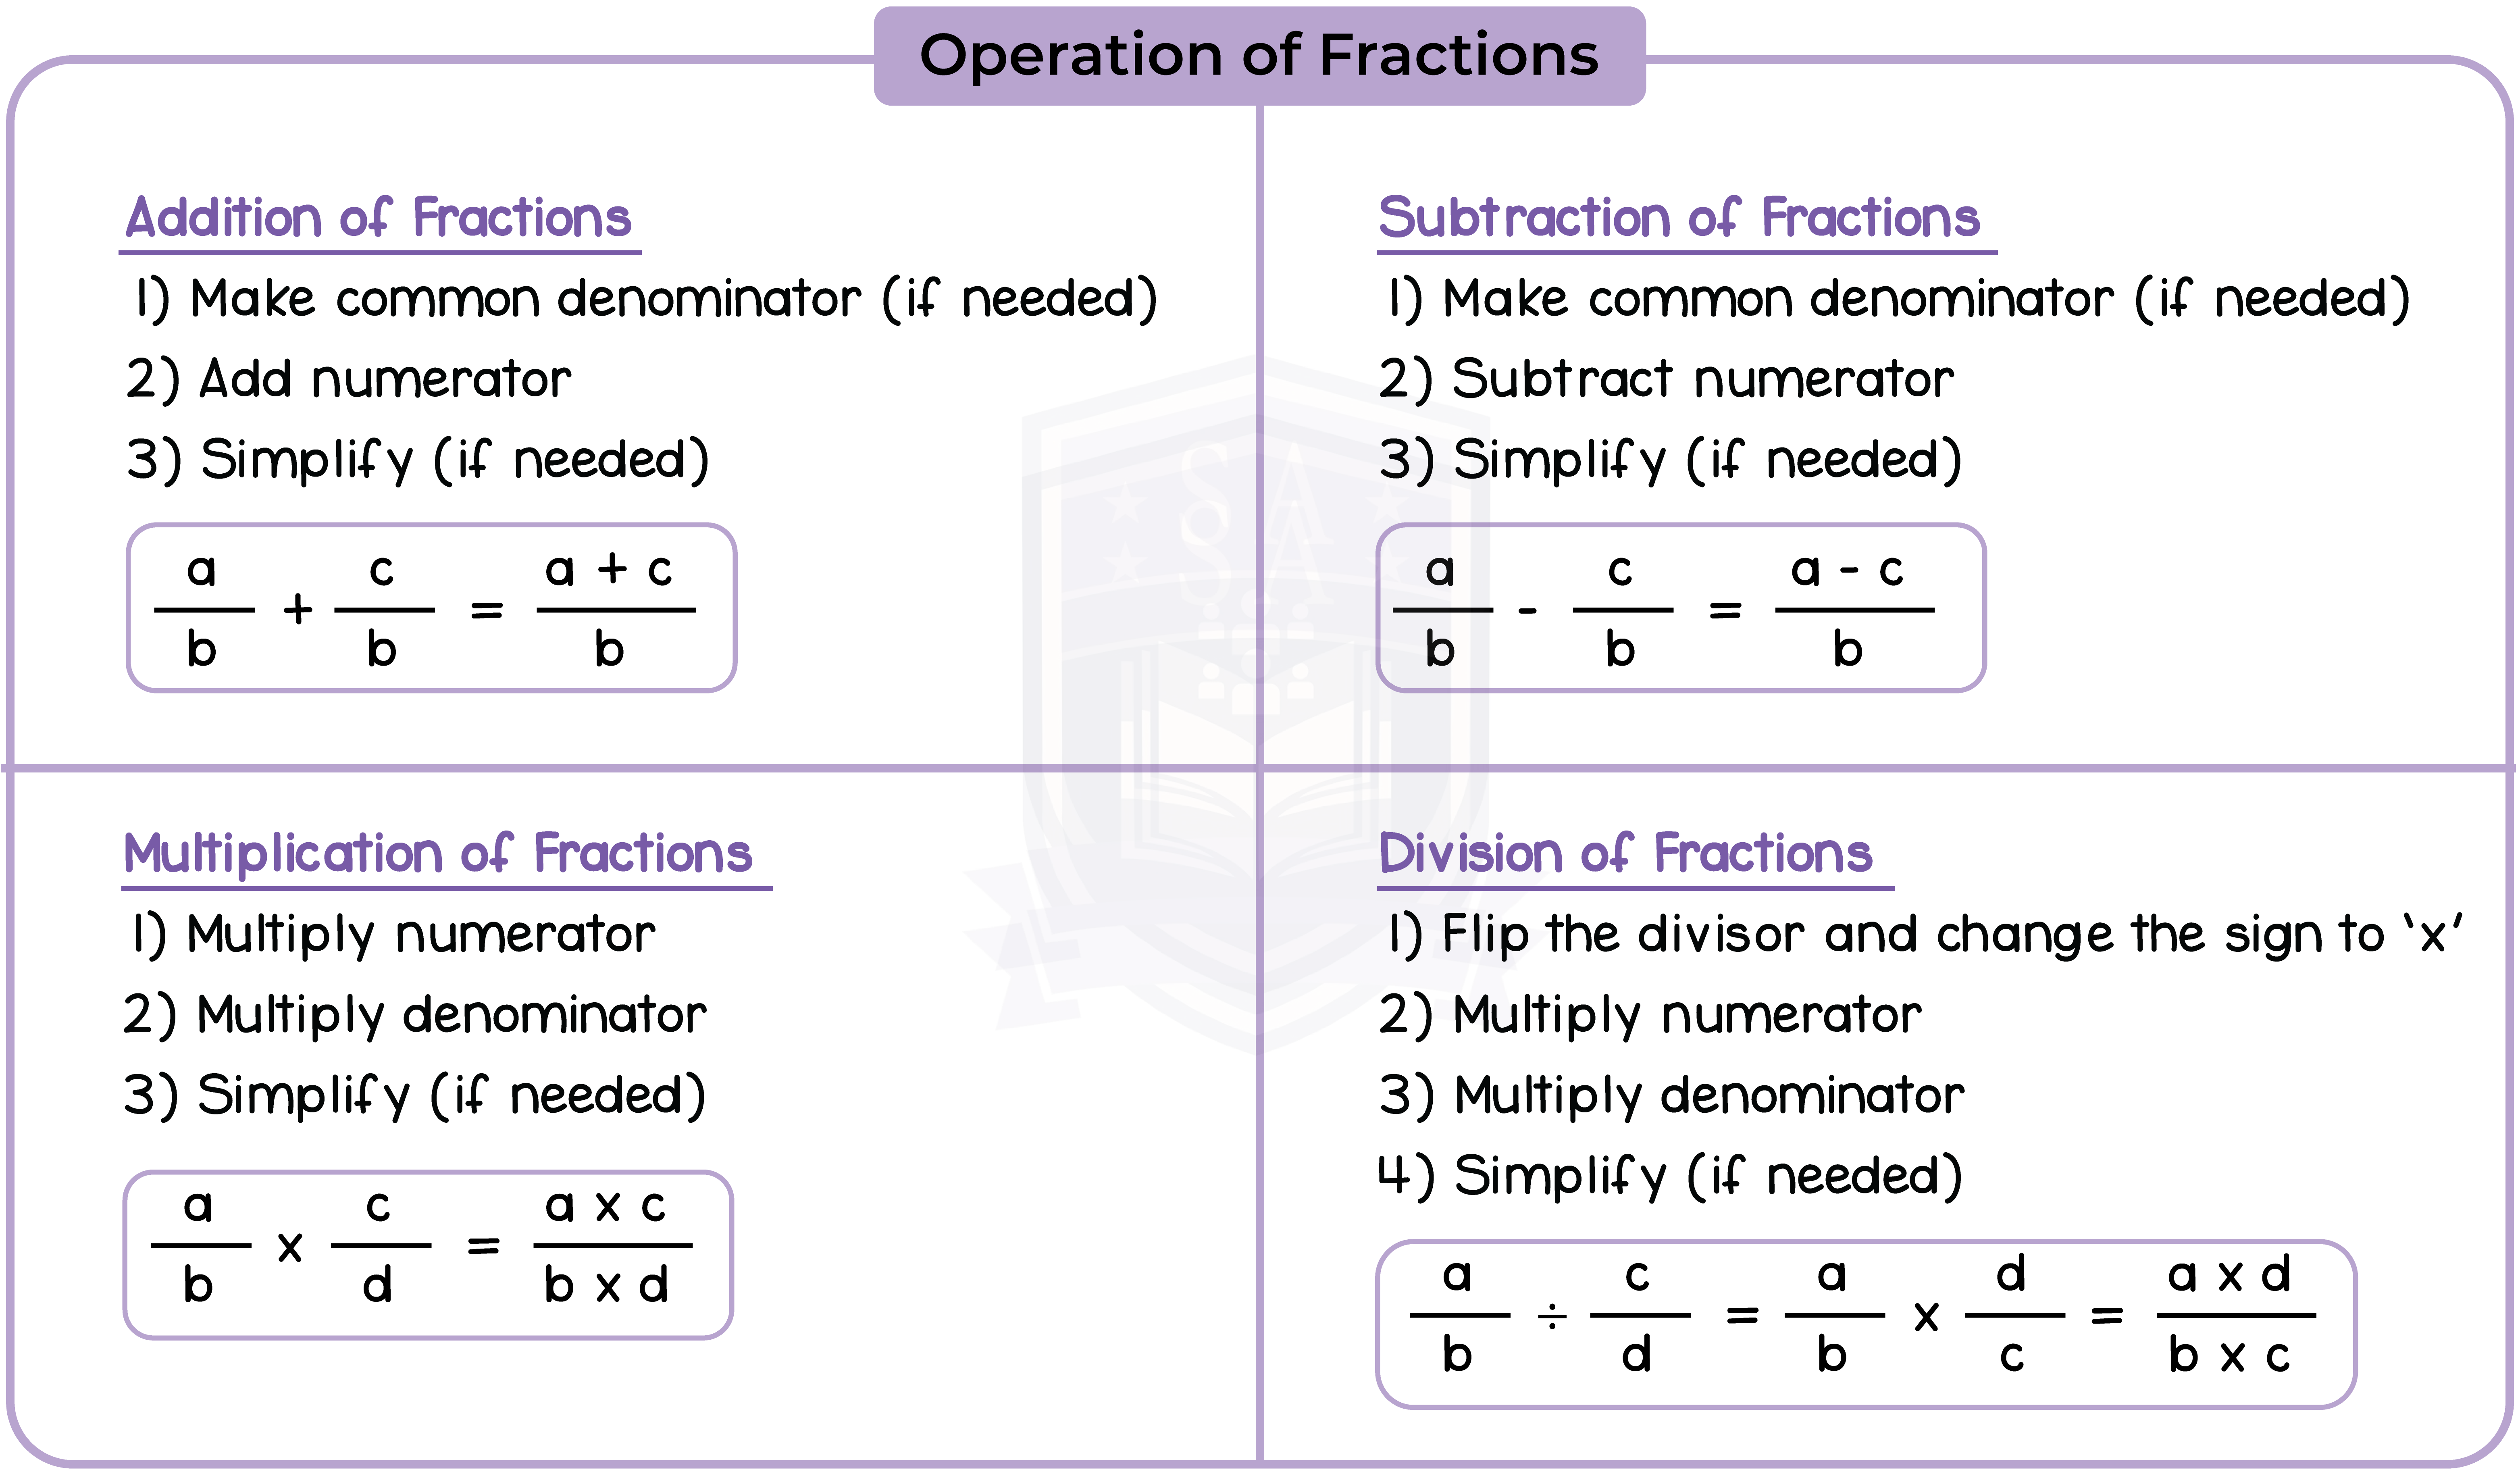 edexcel_igcse_mathematics a_topic 02_fractions_003_operation of fraction